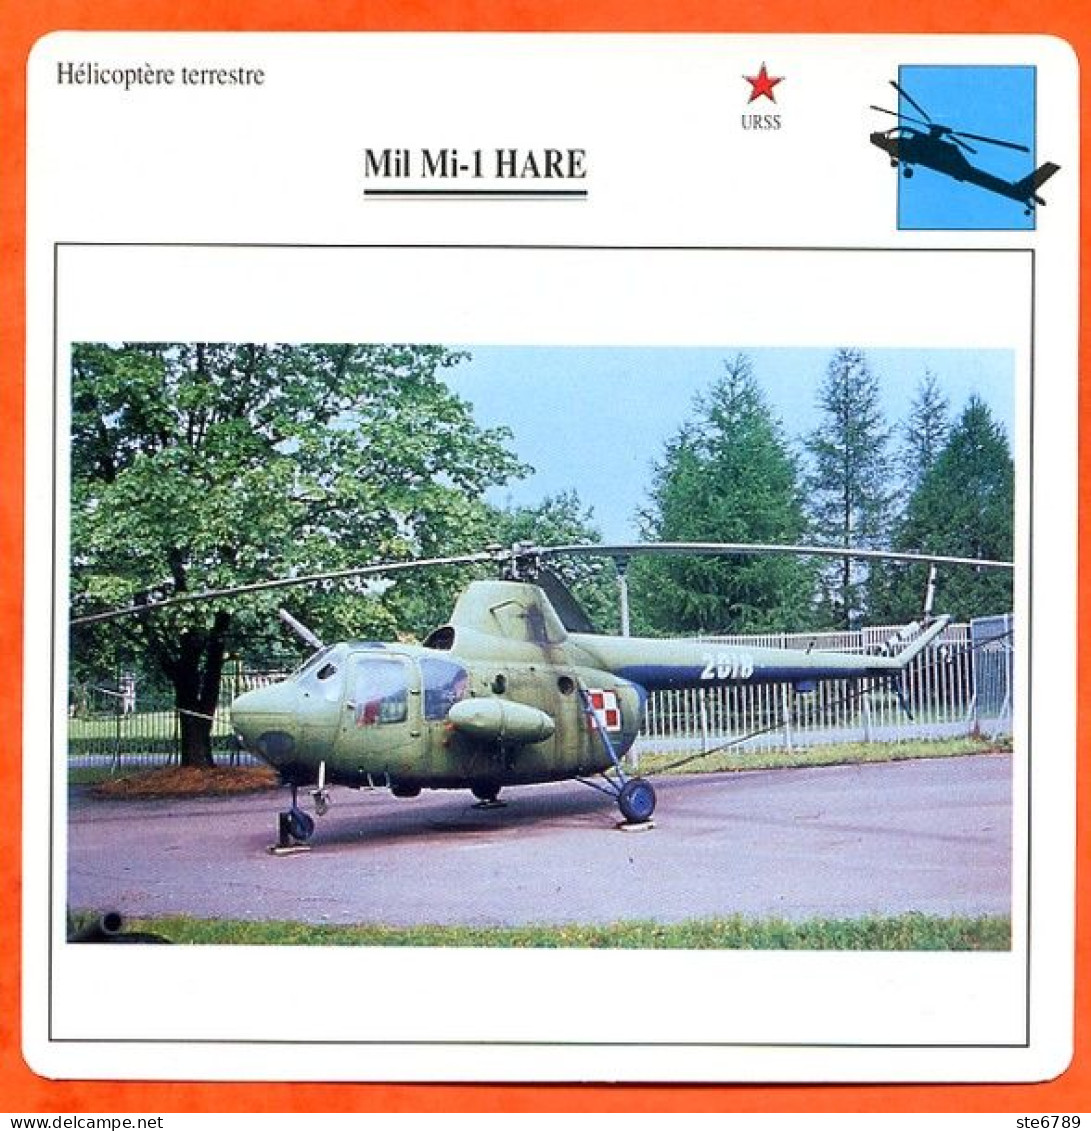 Fiche Aviation Mil Mi 1 HARE / Hélicoptère Terrestre URSS Avions - Airplanes